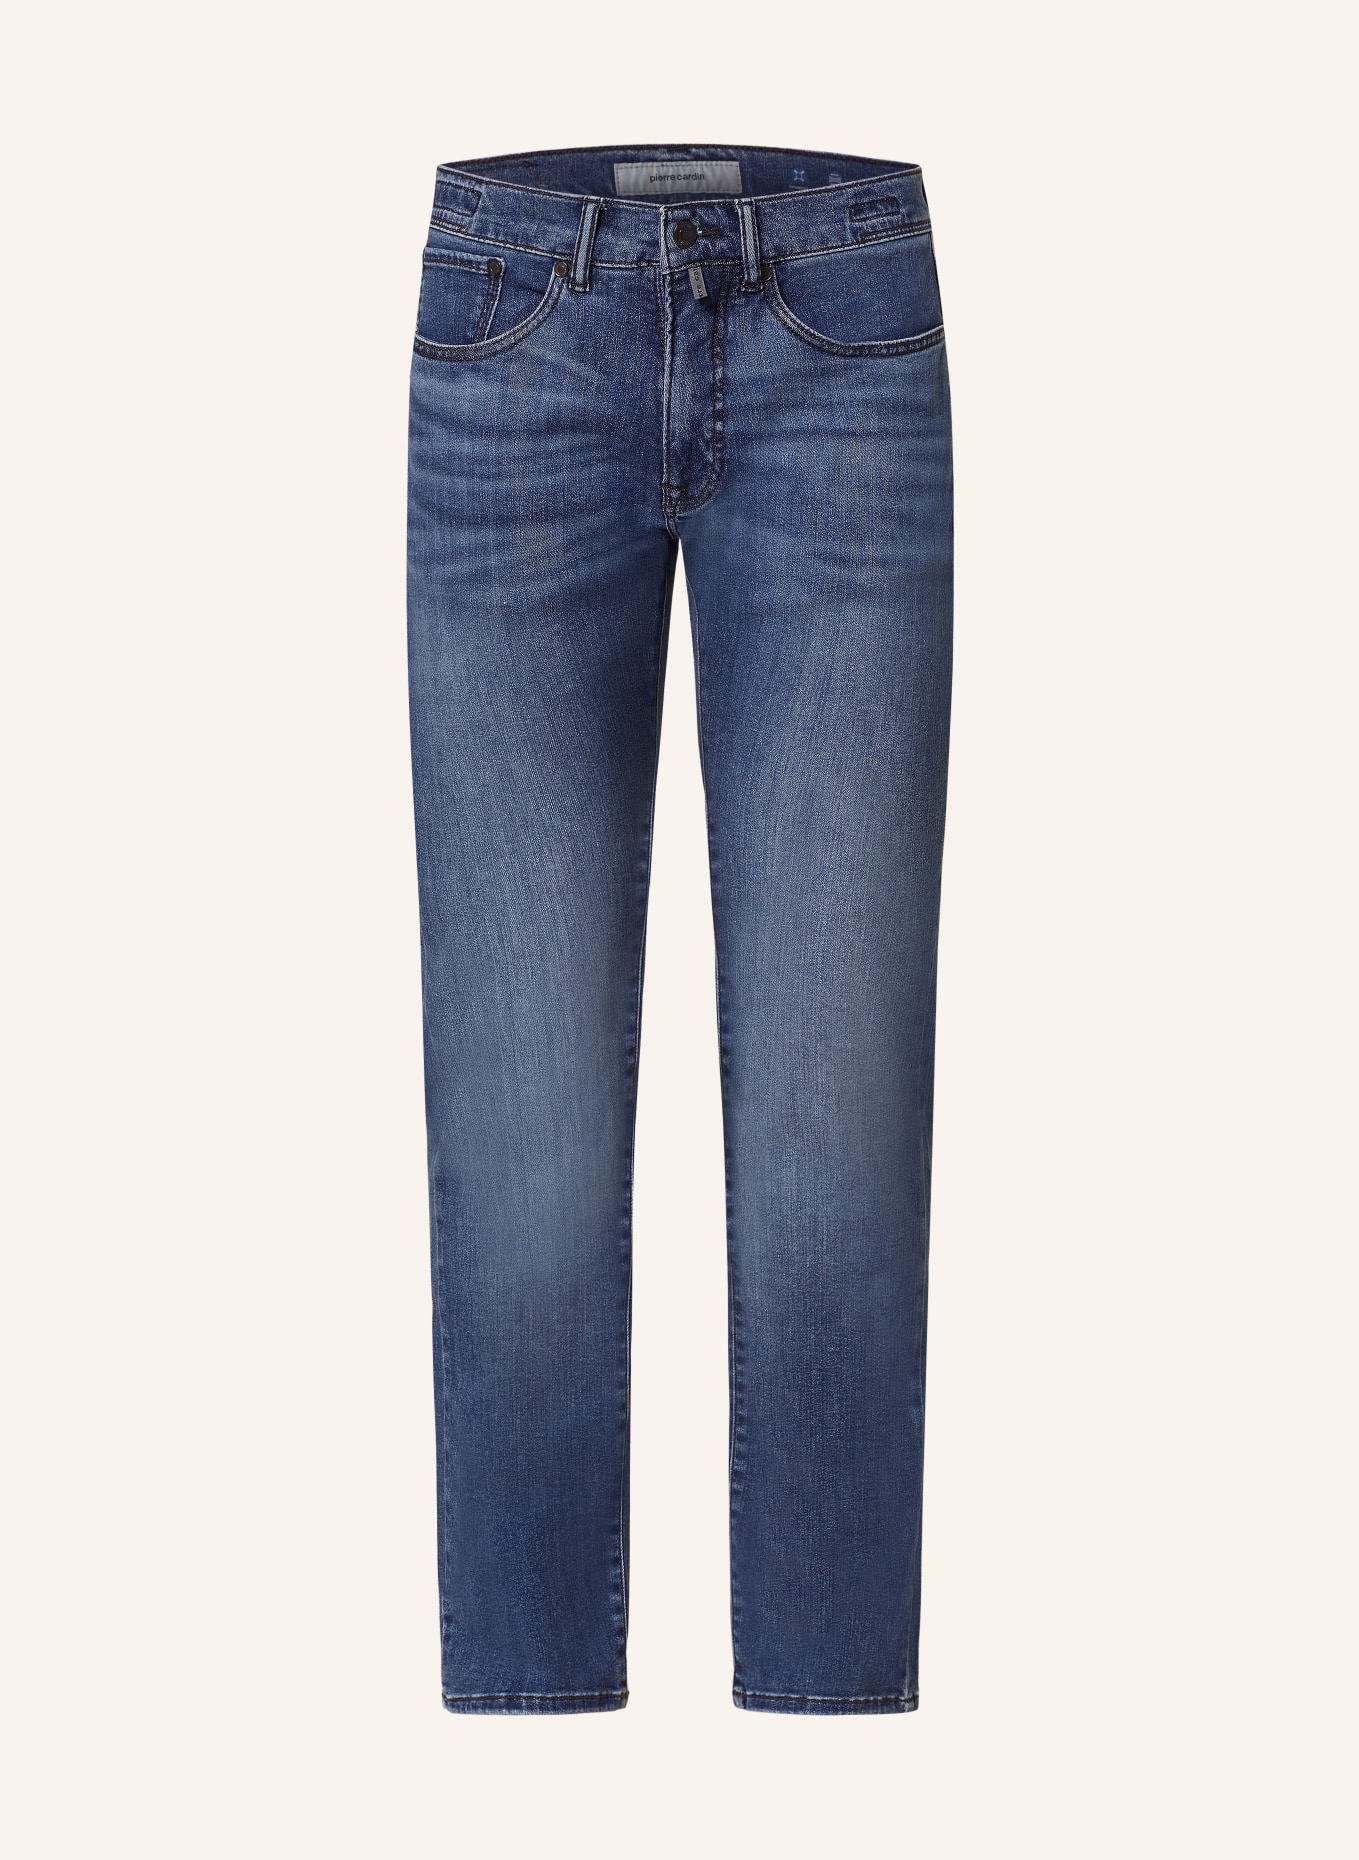 pierre cardin Jeans ANTIBES Slim Fit, Farbe: 6835 ocean blue used whisker (Bild 1)